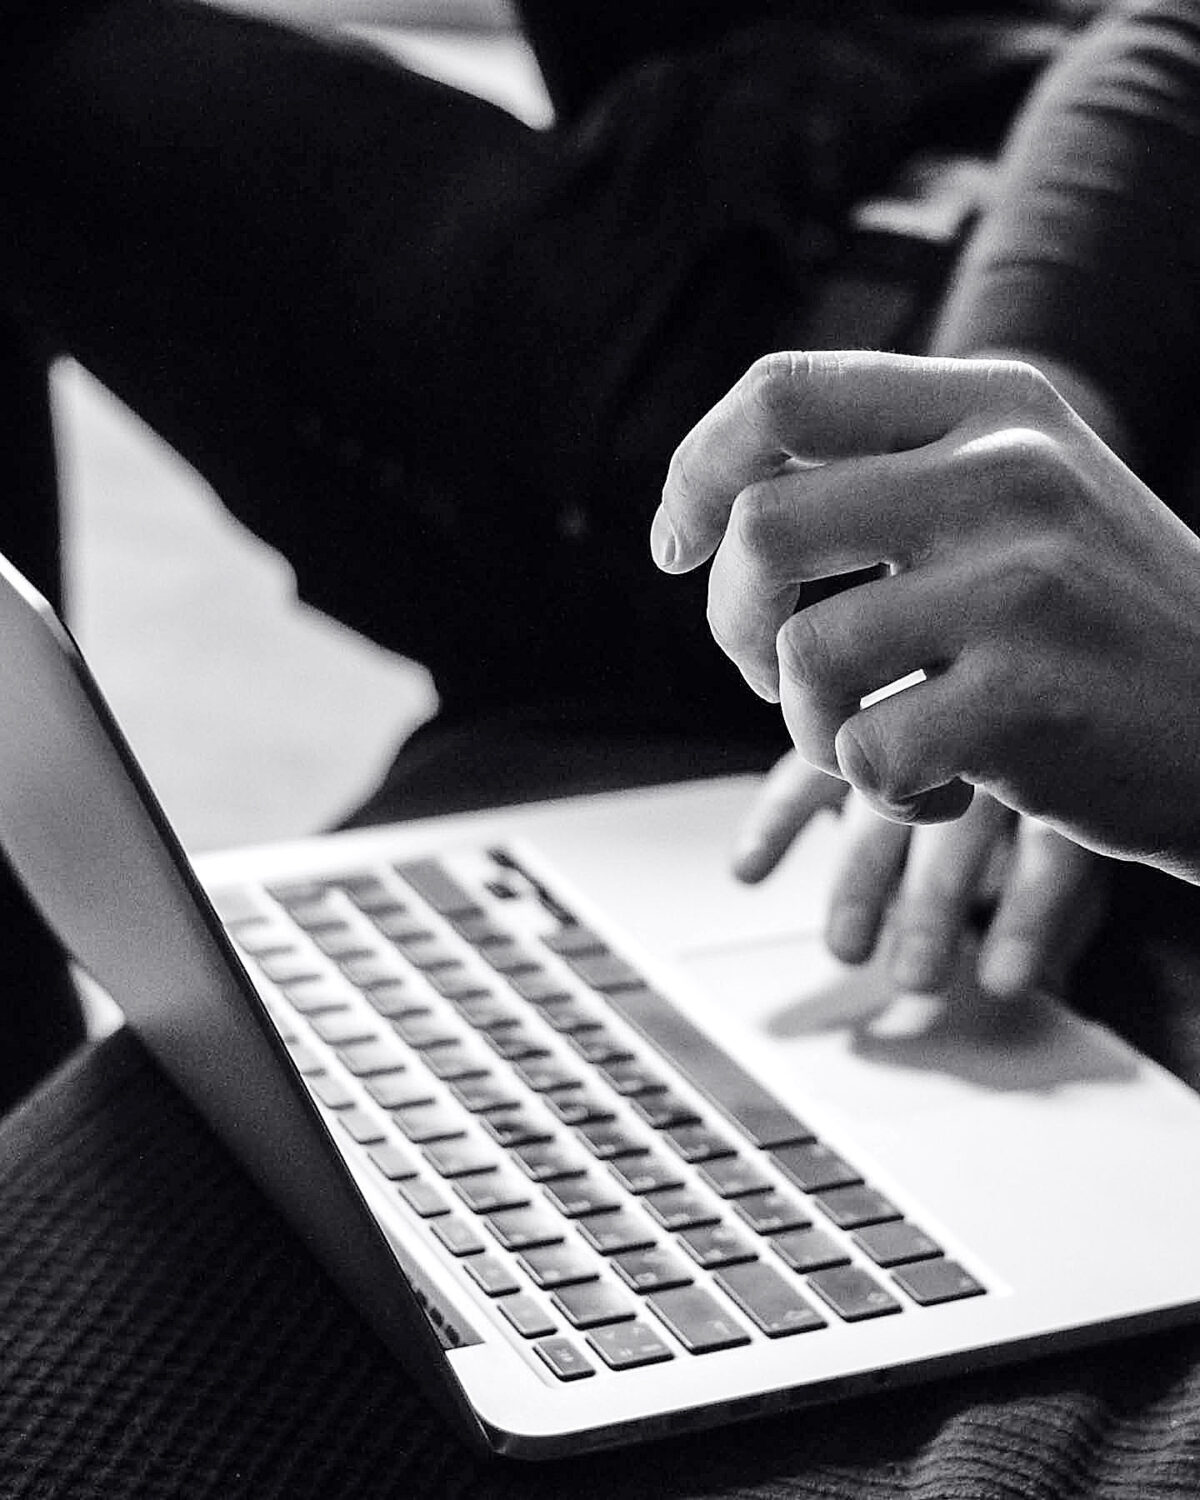 Laptop and working hands in grey tones